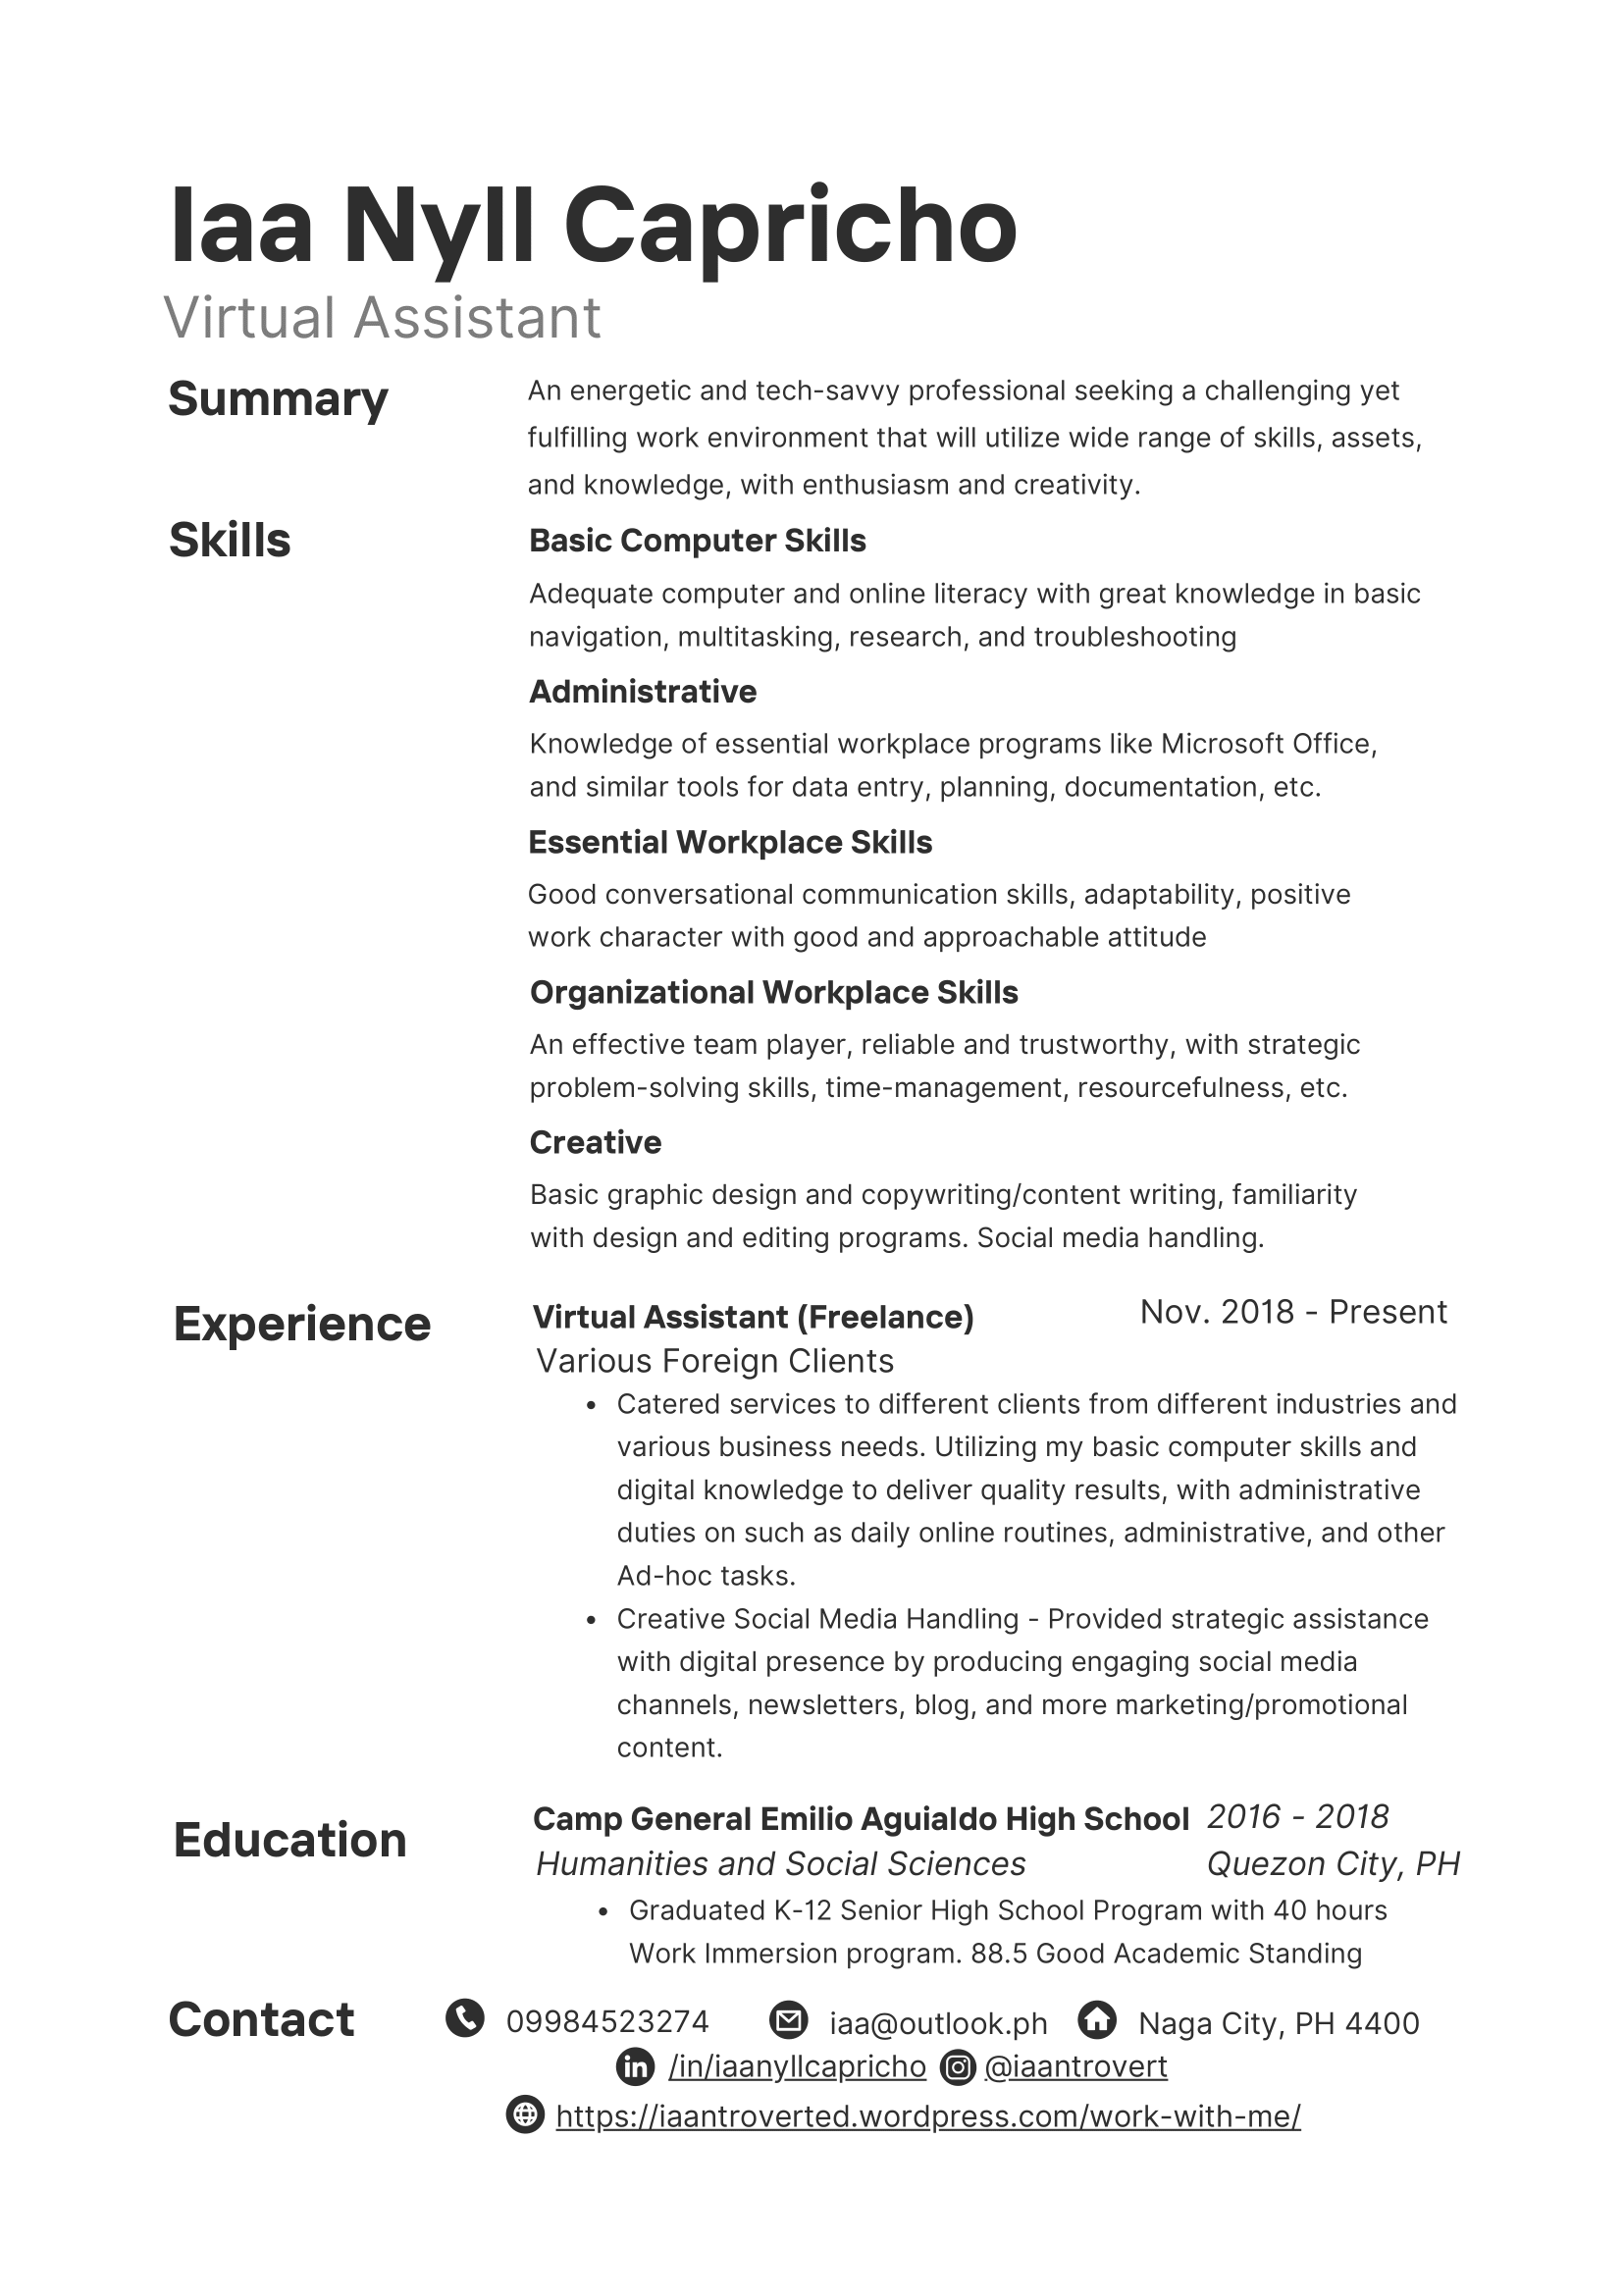 Iaa Nyll's VA Resume